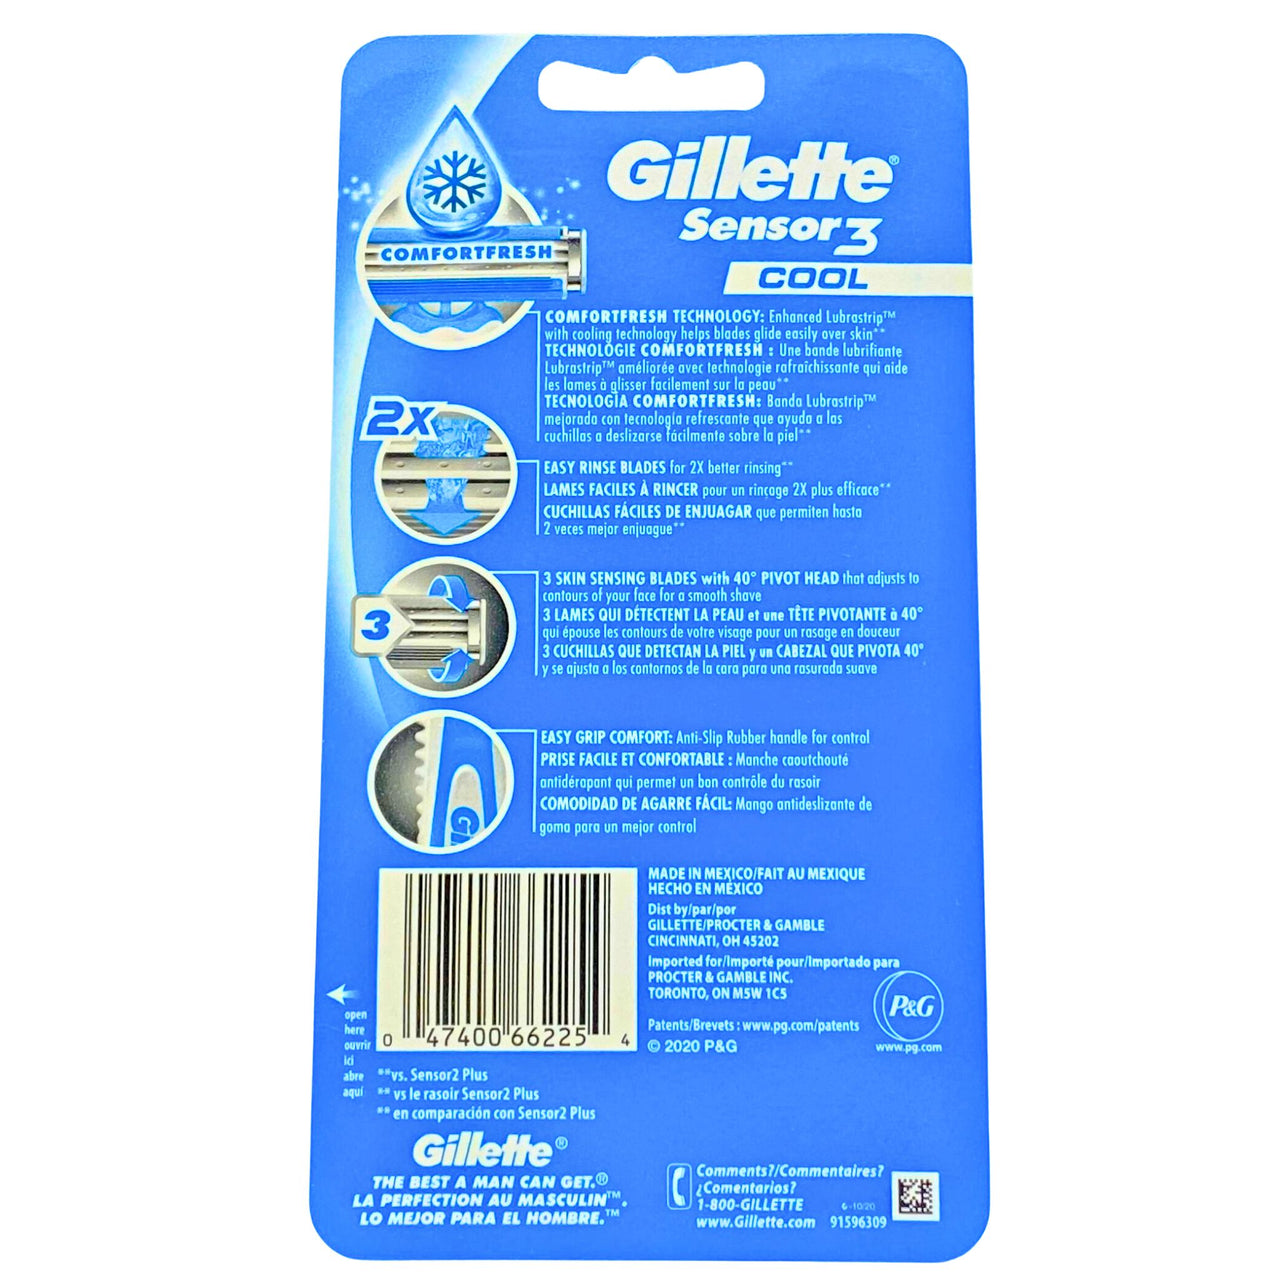 Gillette Sensor 3 Cool 5 Disposable Razors Comfortfresh 40* Pivot